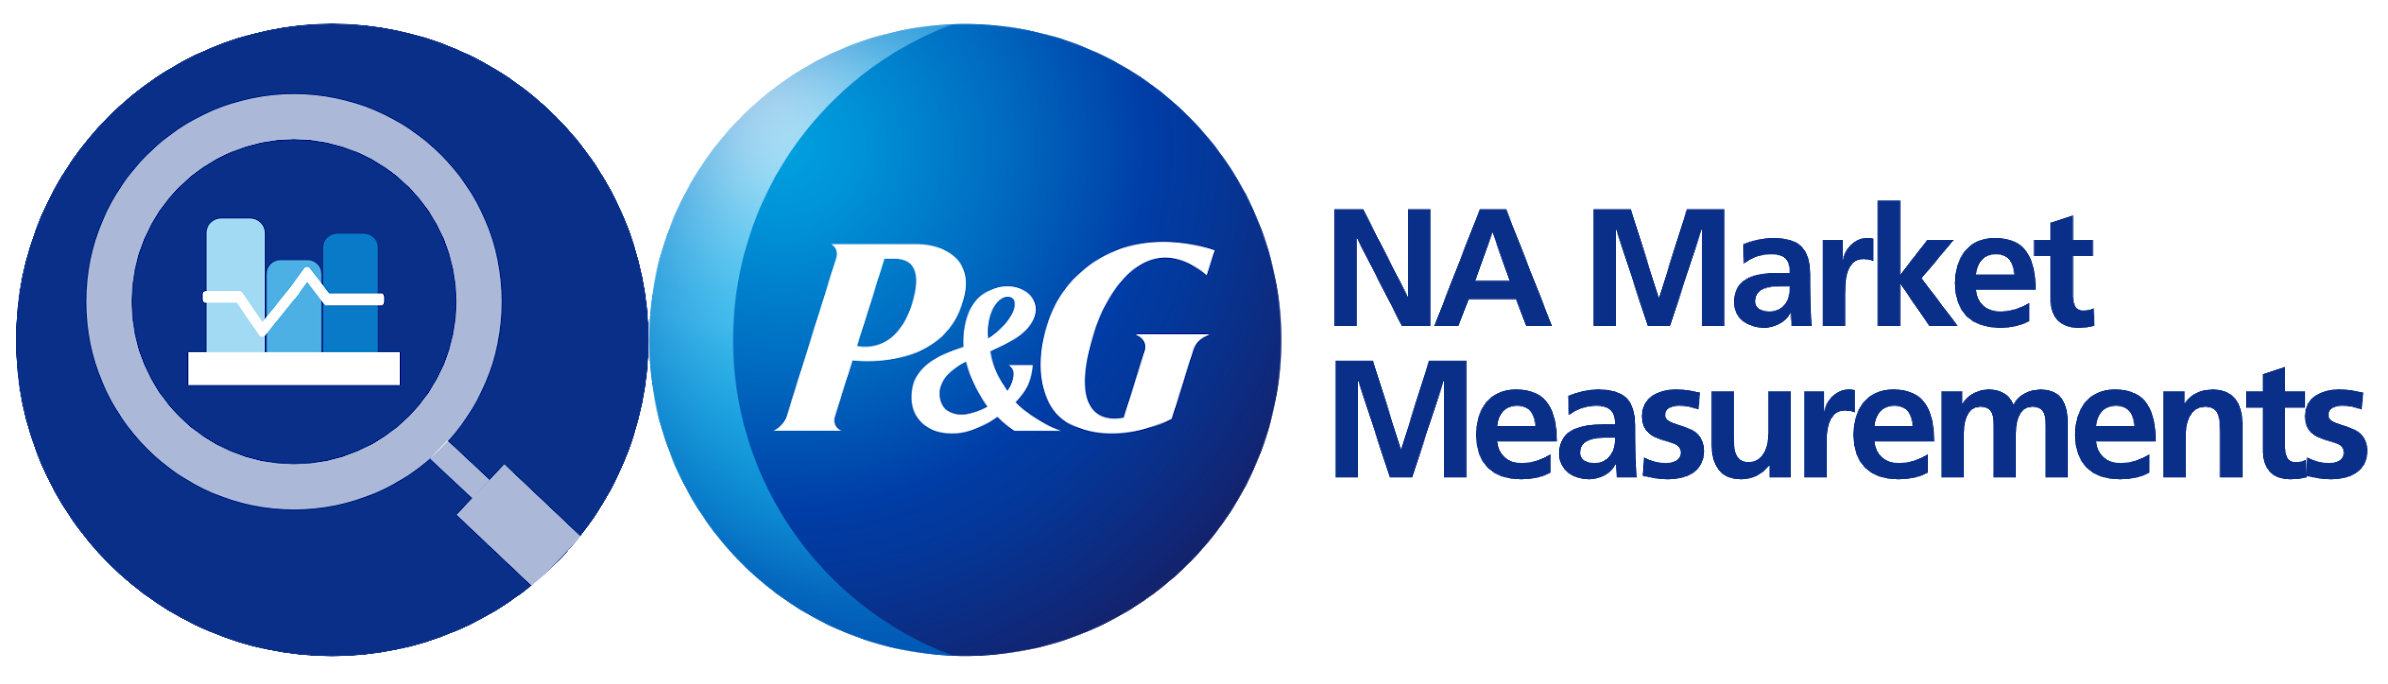 Procter and Gamble Market Measurements logo